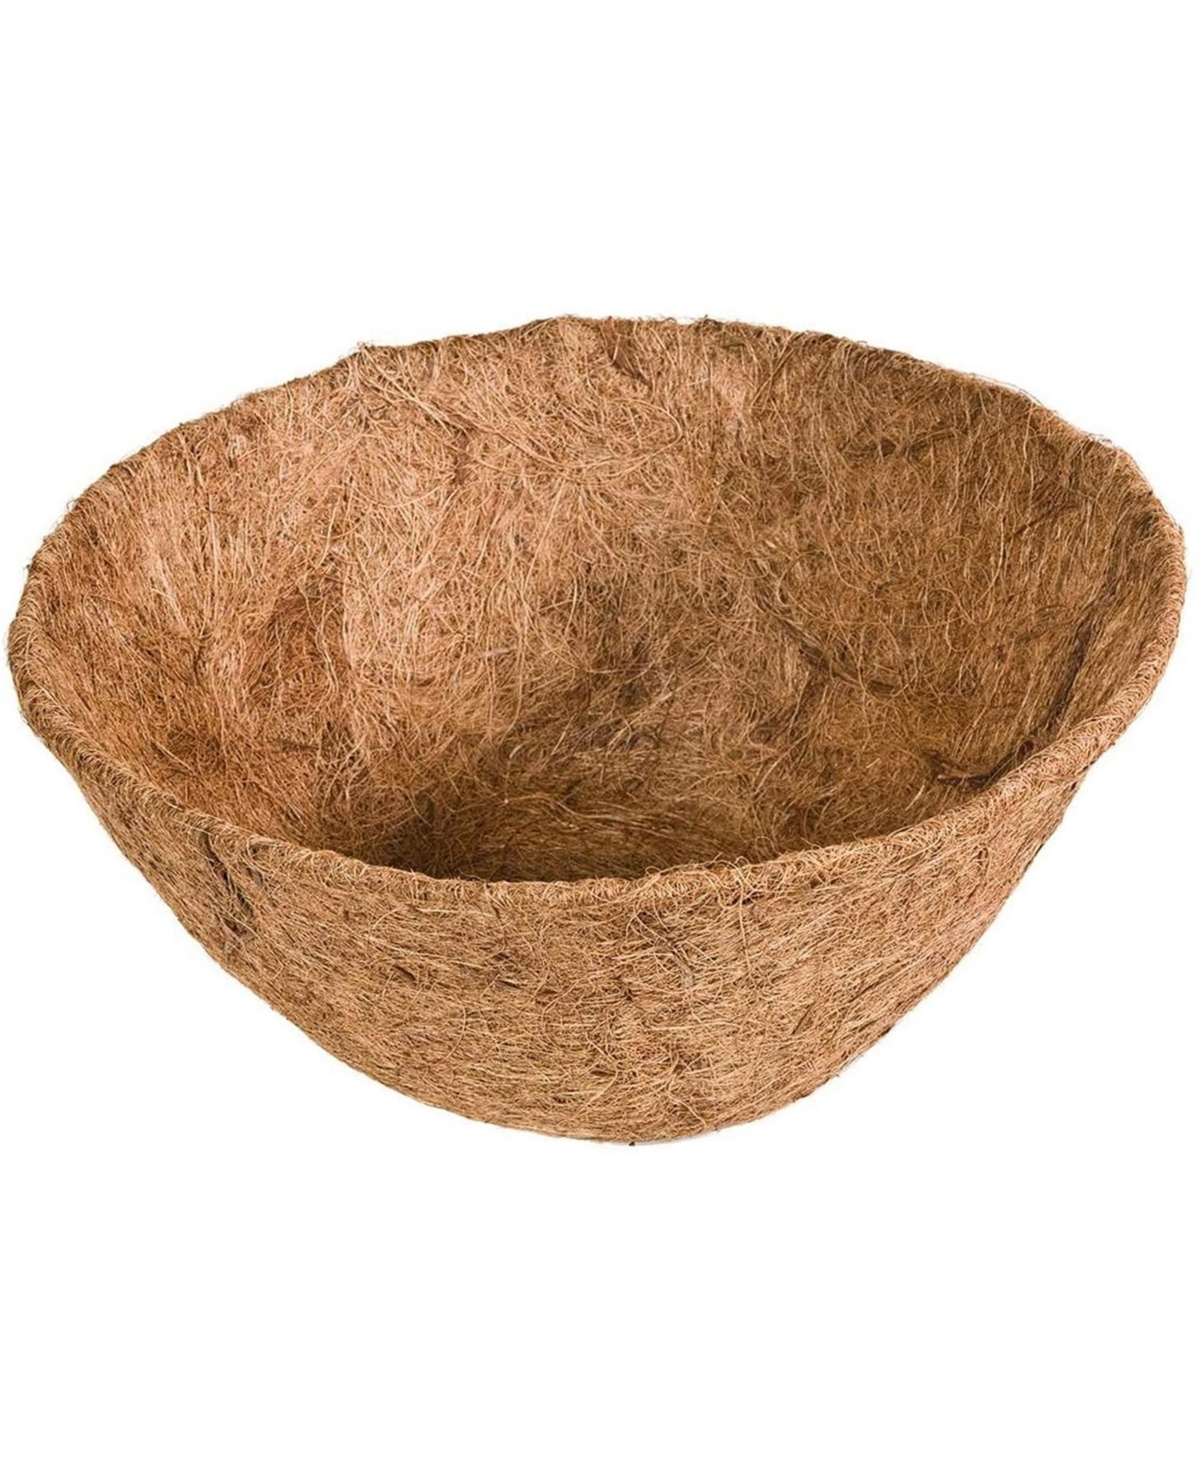 10 Inch Basket Coco Liner - Brown